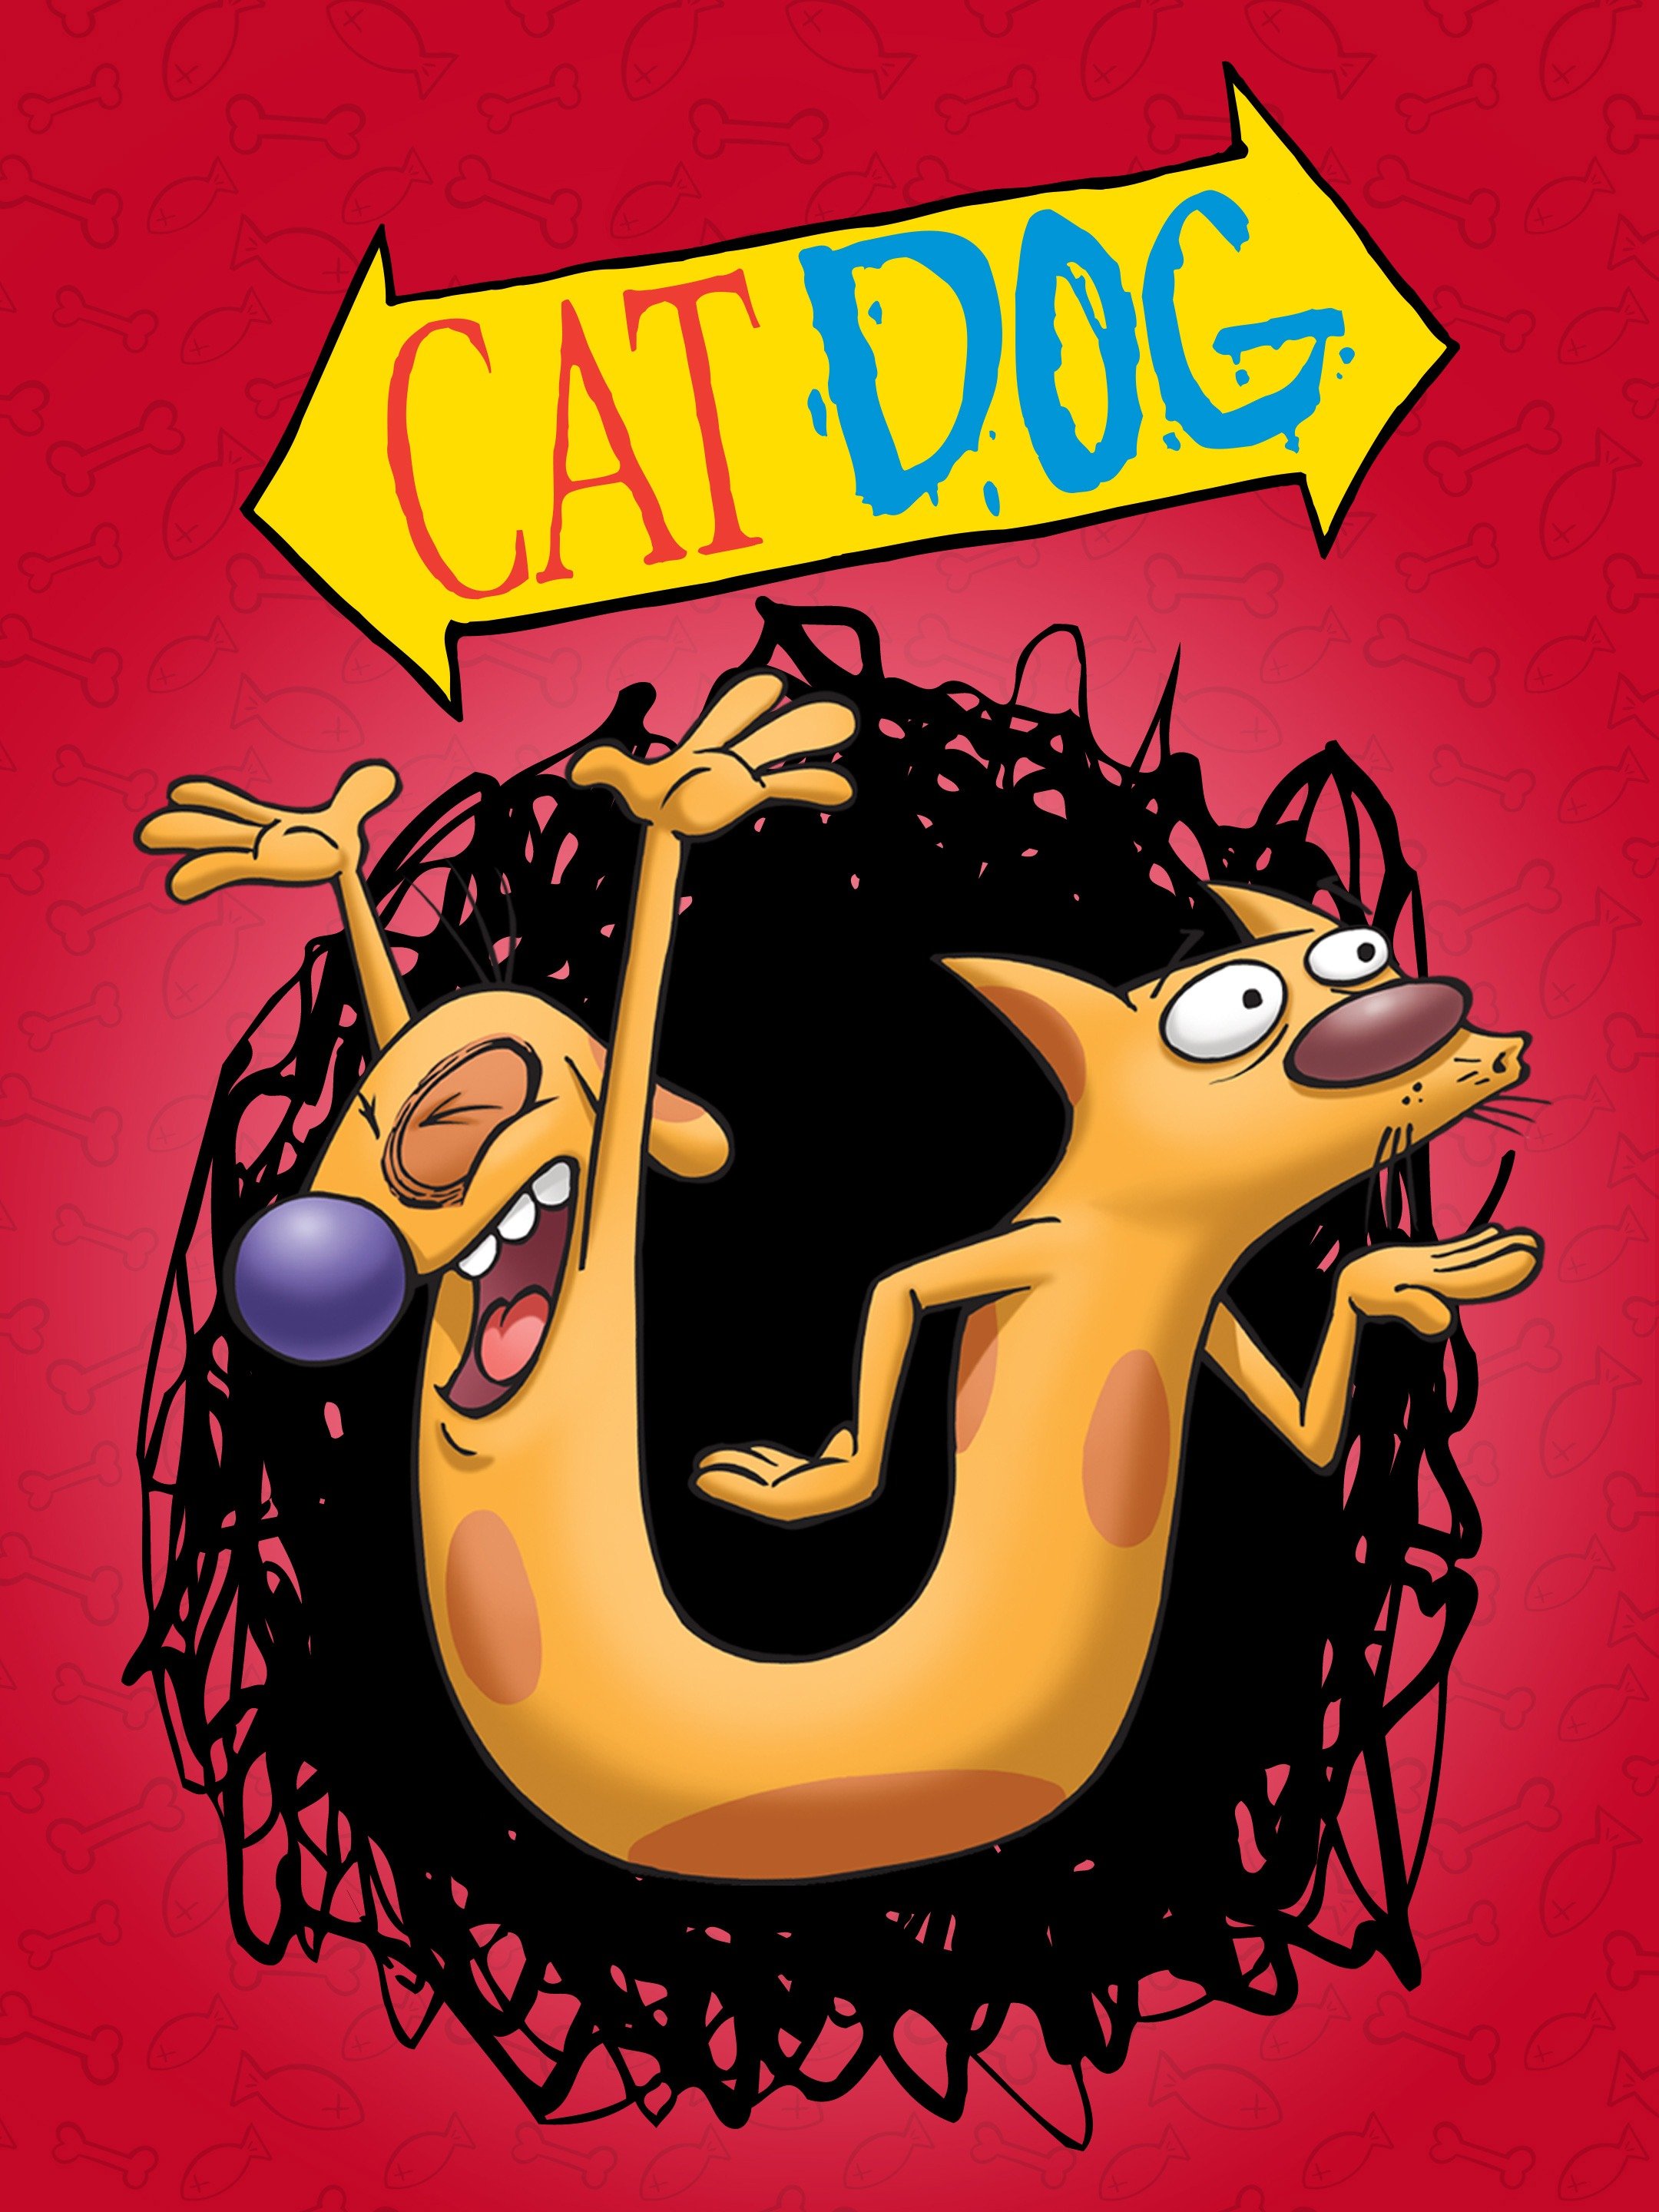 CatDog - Rotten Tomatoes